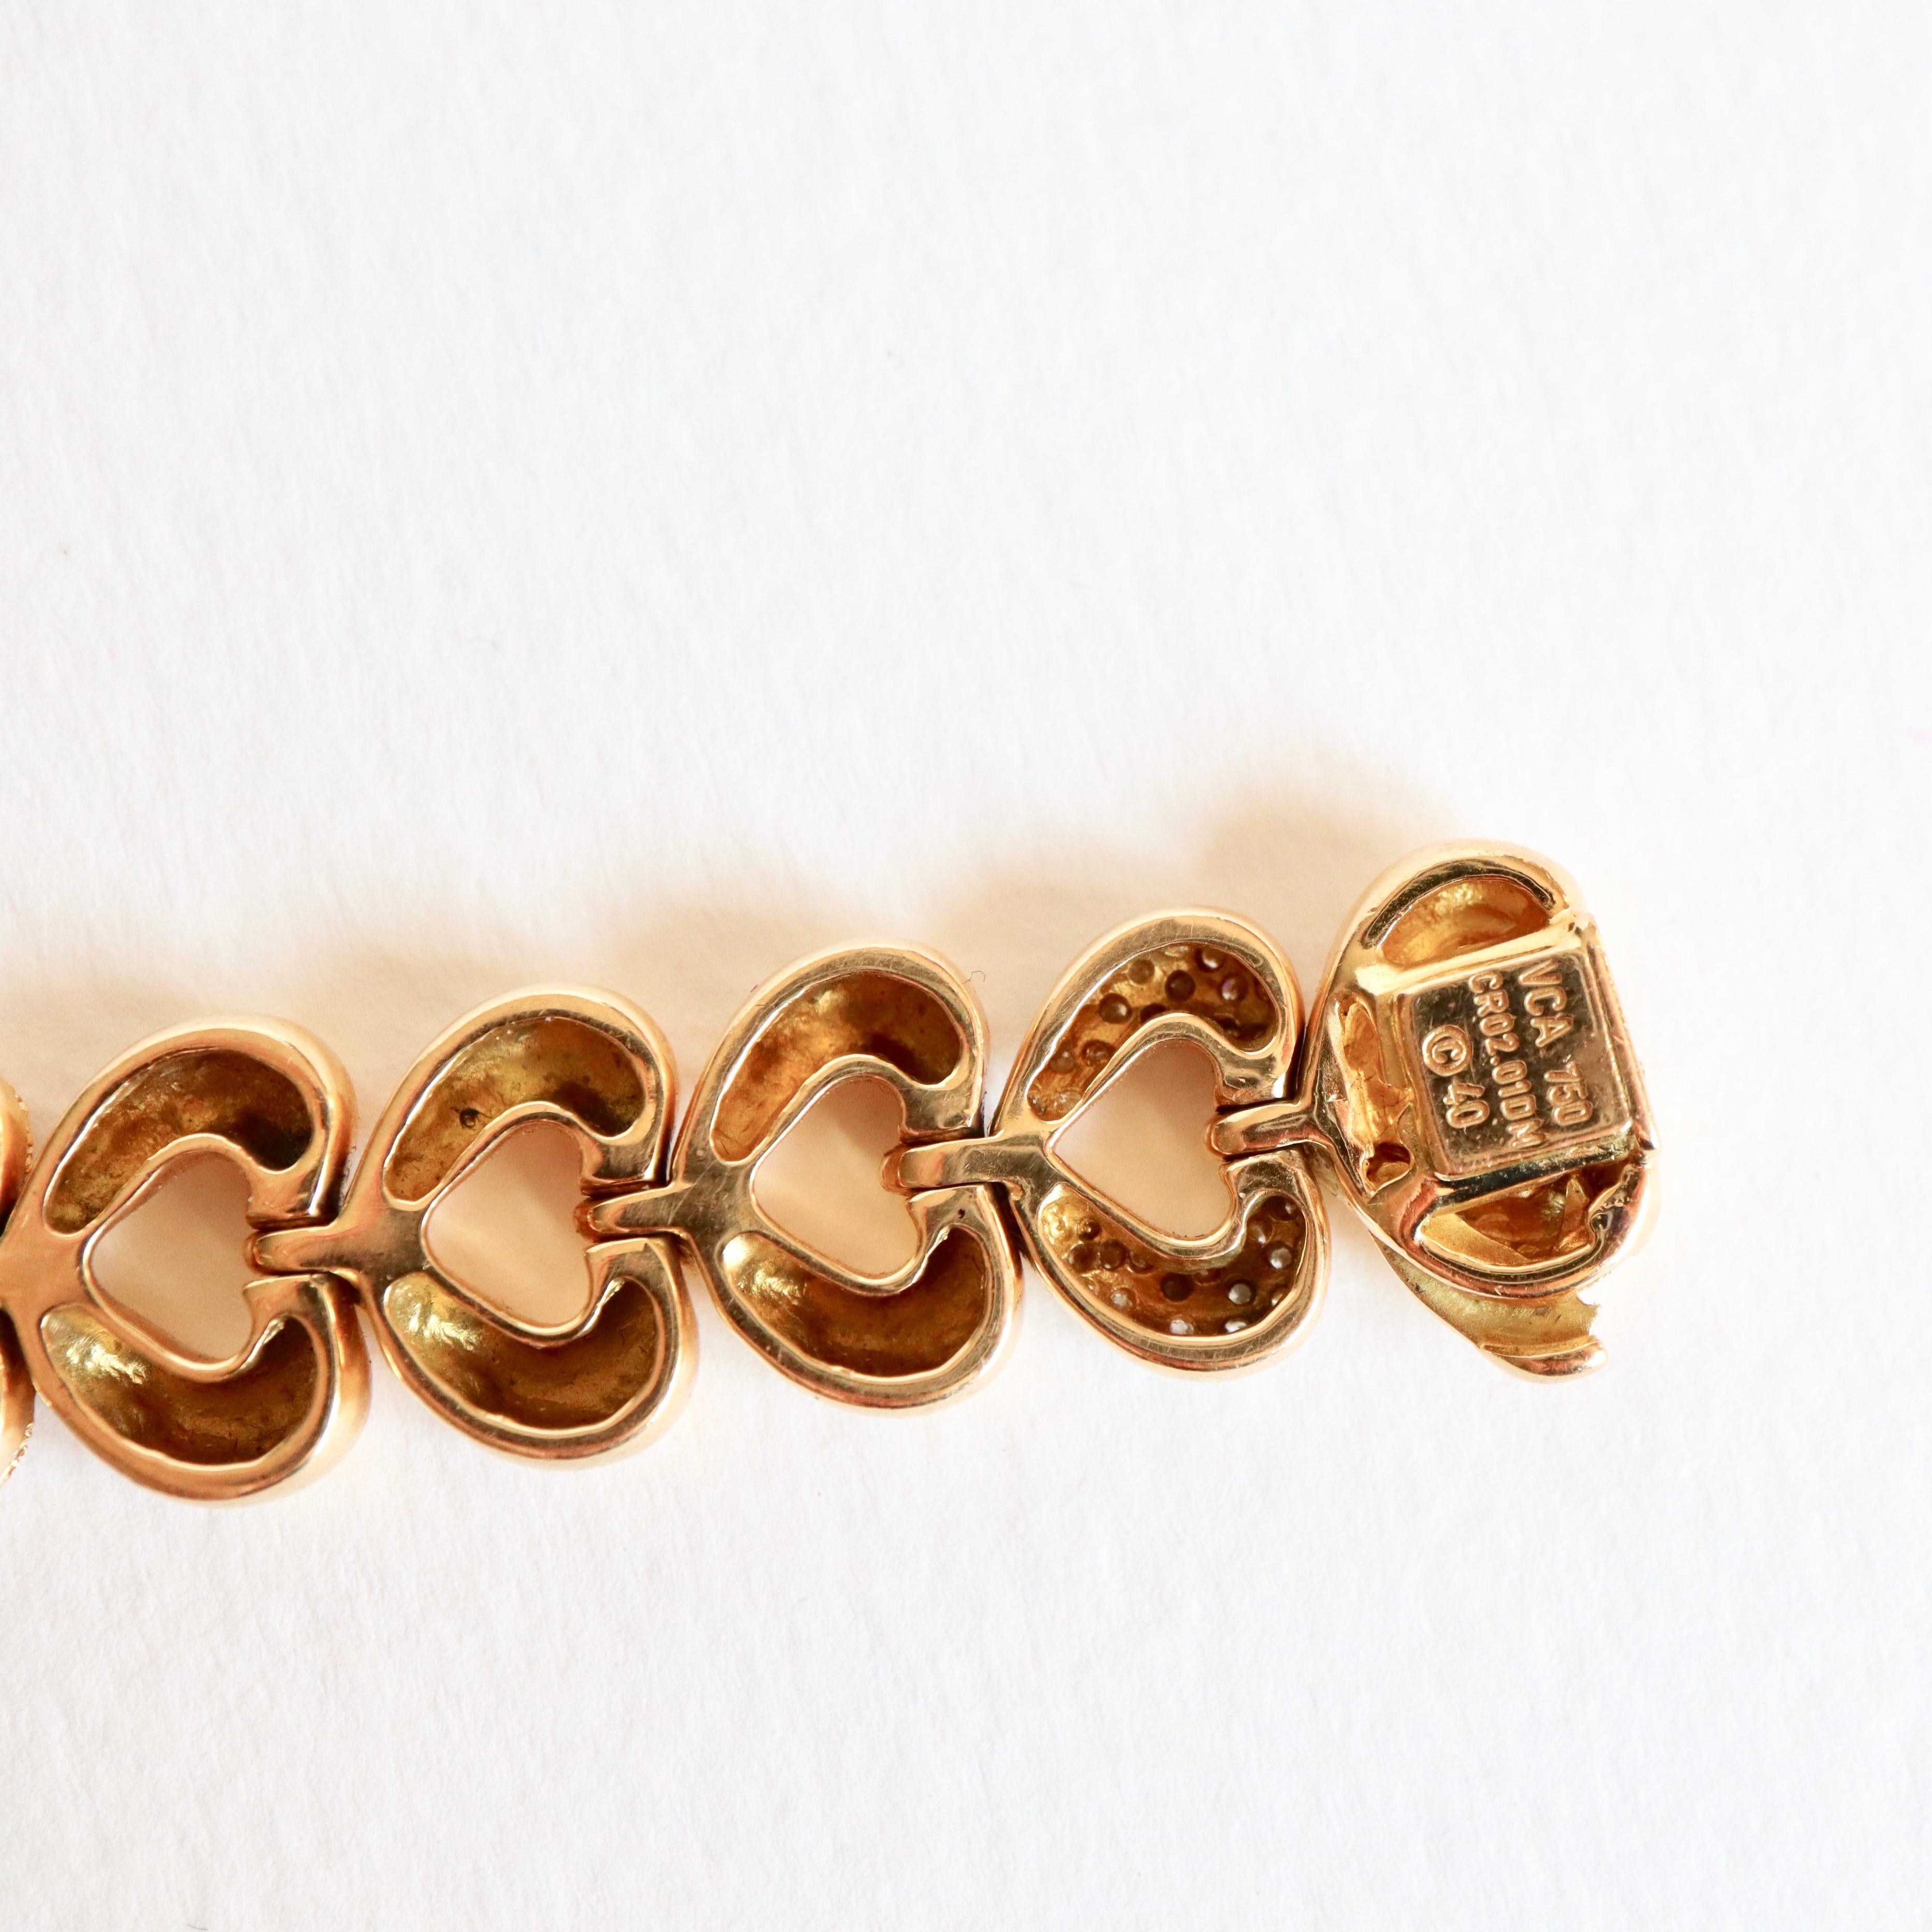 Brilliant Cut Van Cleef & Arpels Heart Links Bracelet in 18 Carat Gold and Diamonds For Sale